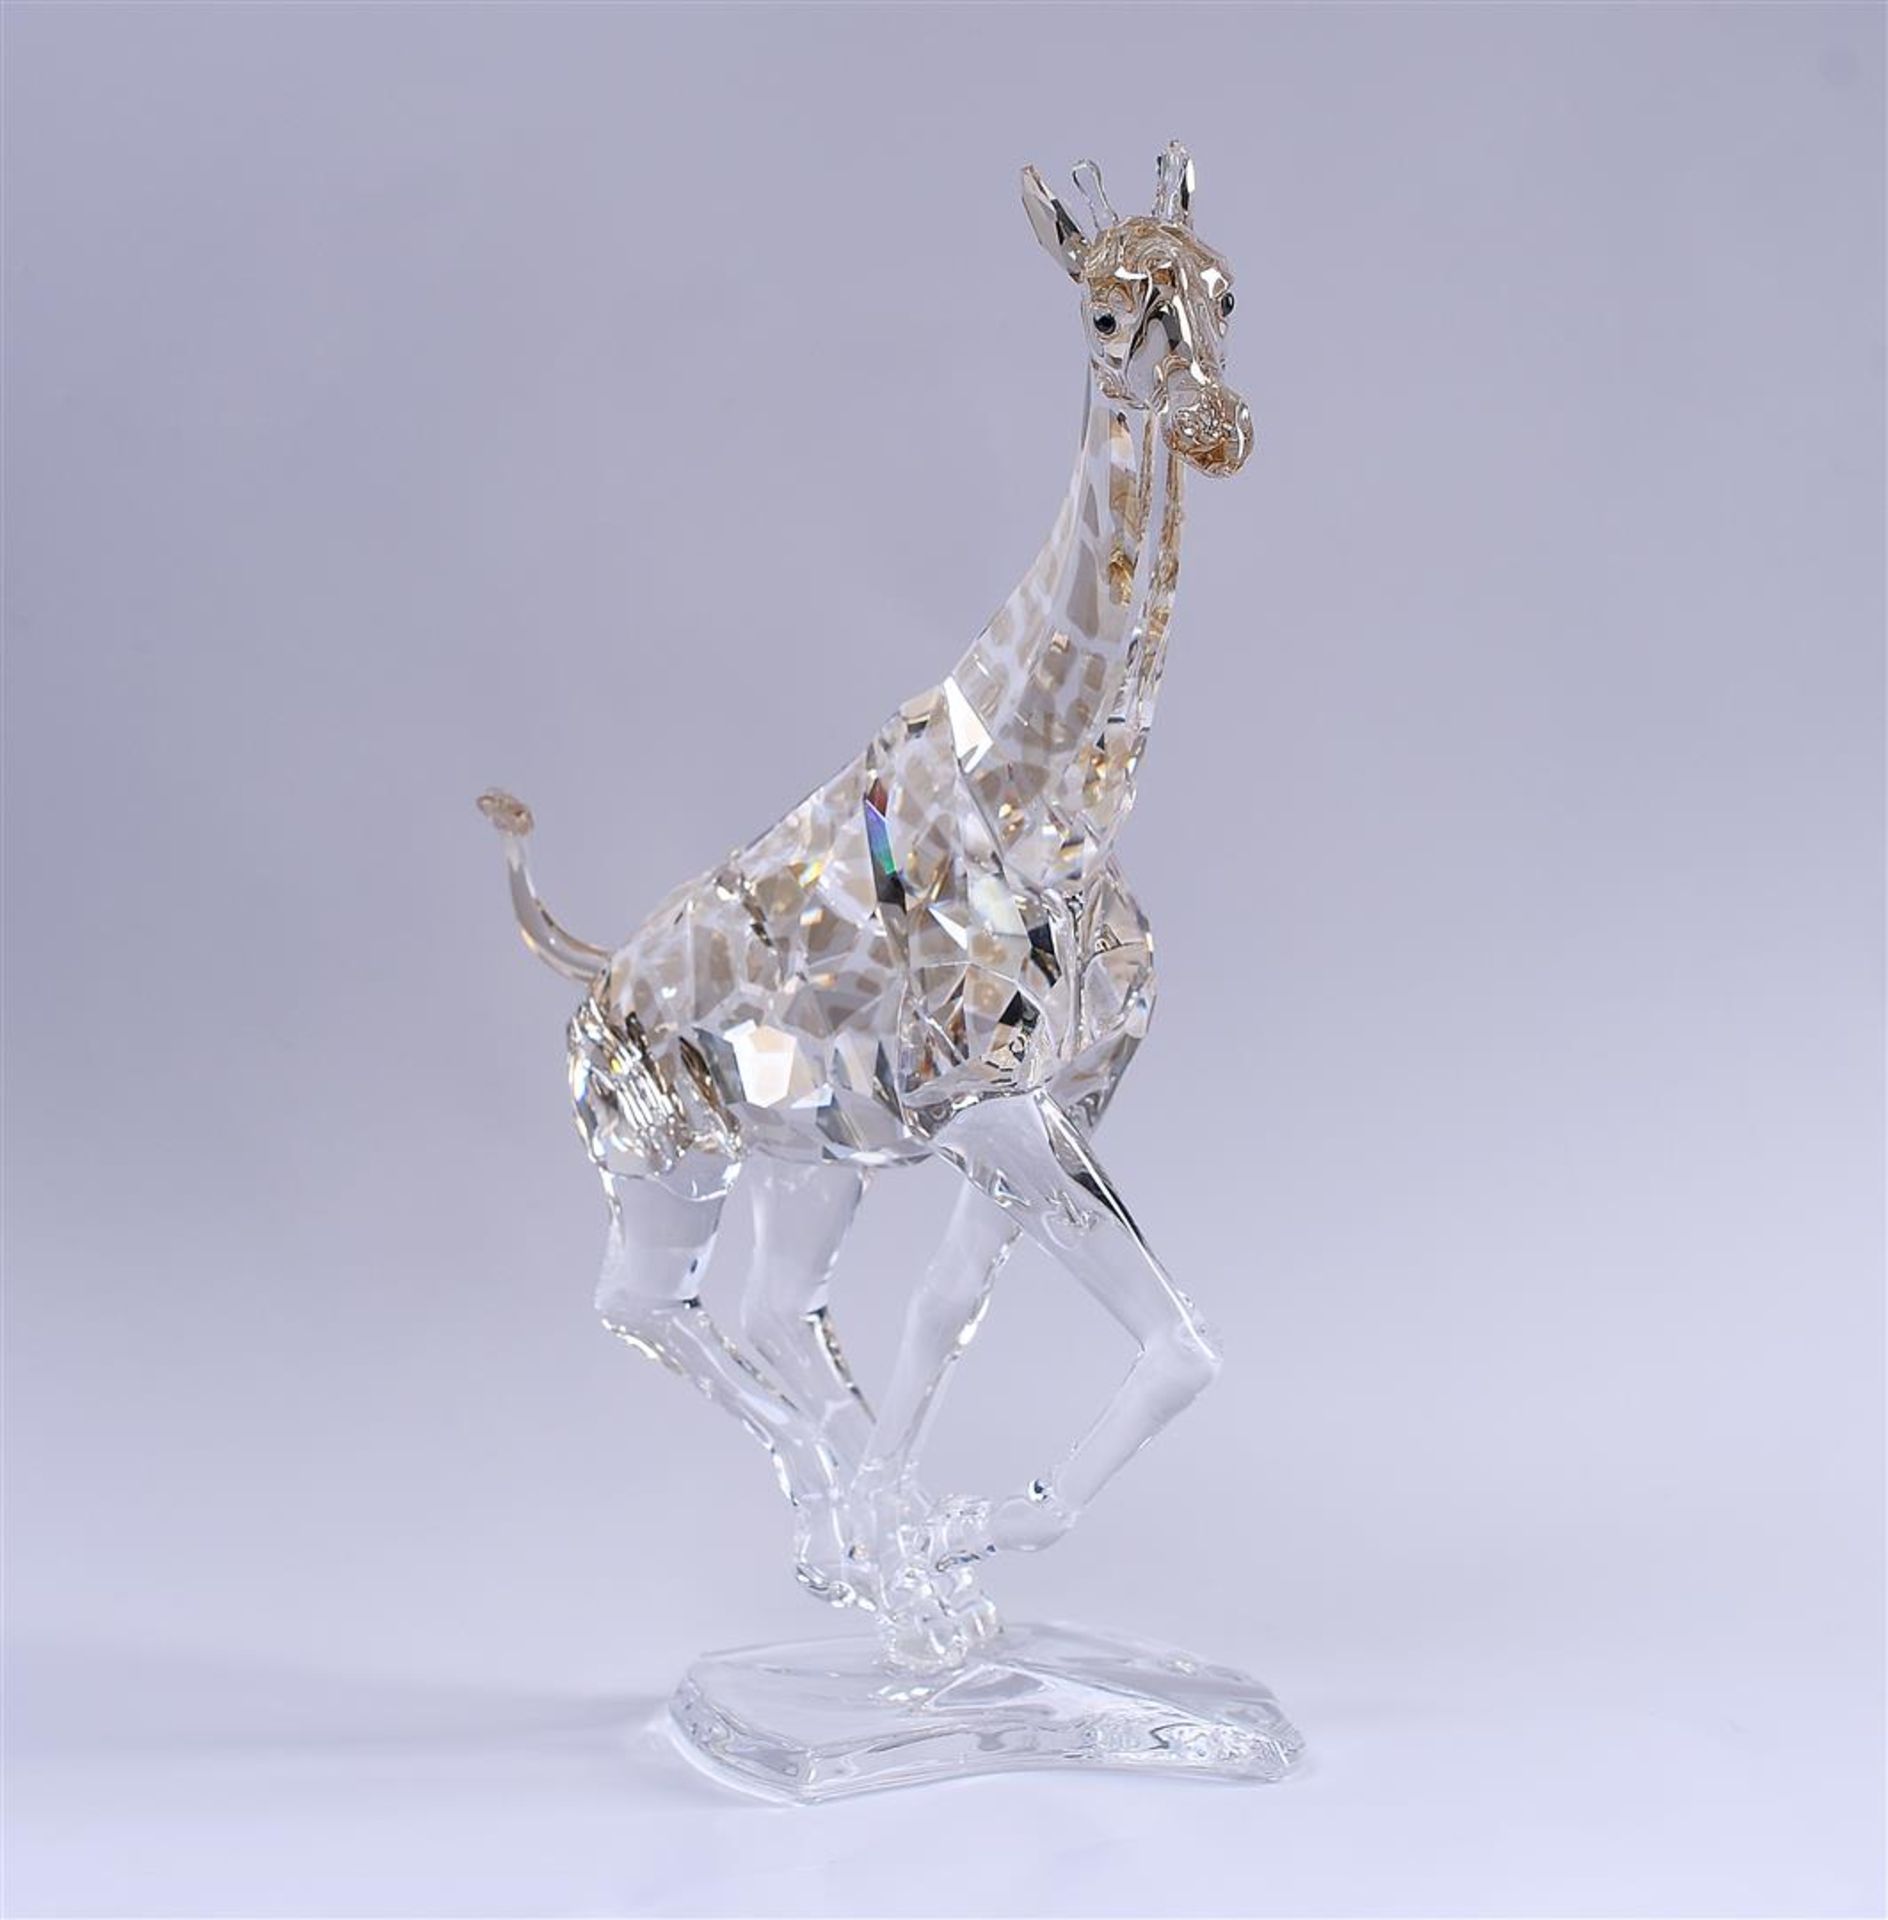 Swarovski, Giraffe, Year of Release 2012, 935896. Includes original box.
17 x 12 cm. - Bild 5 aus 8